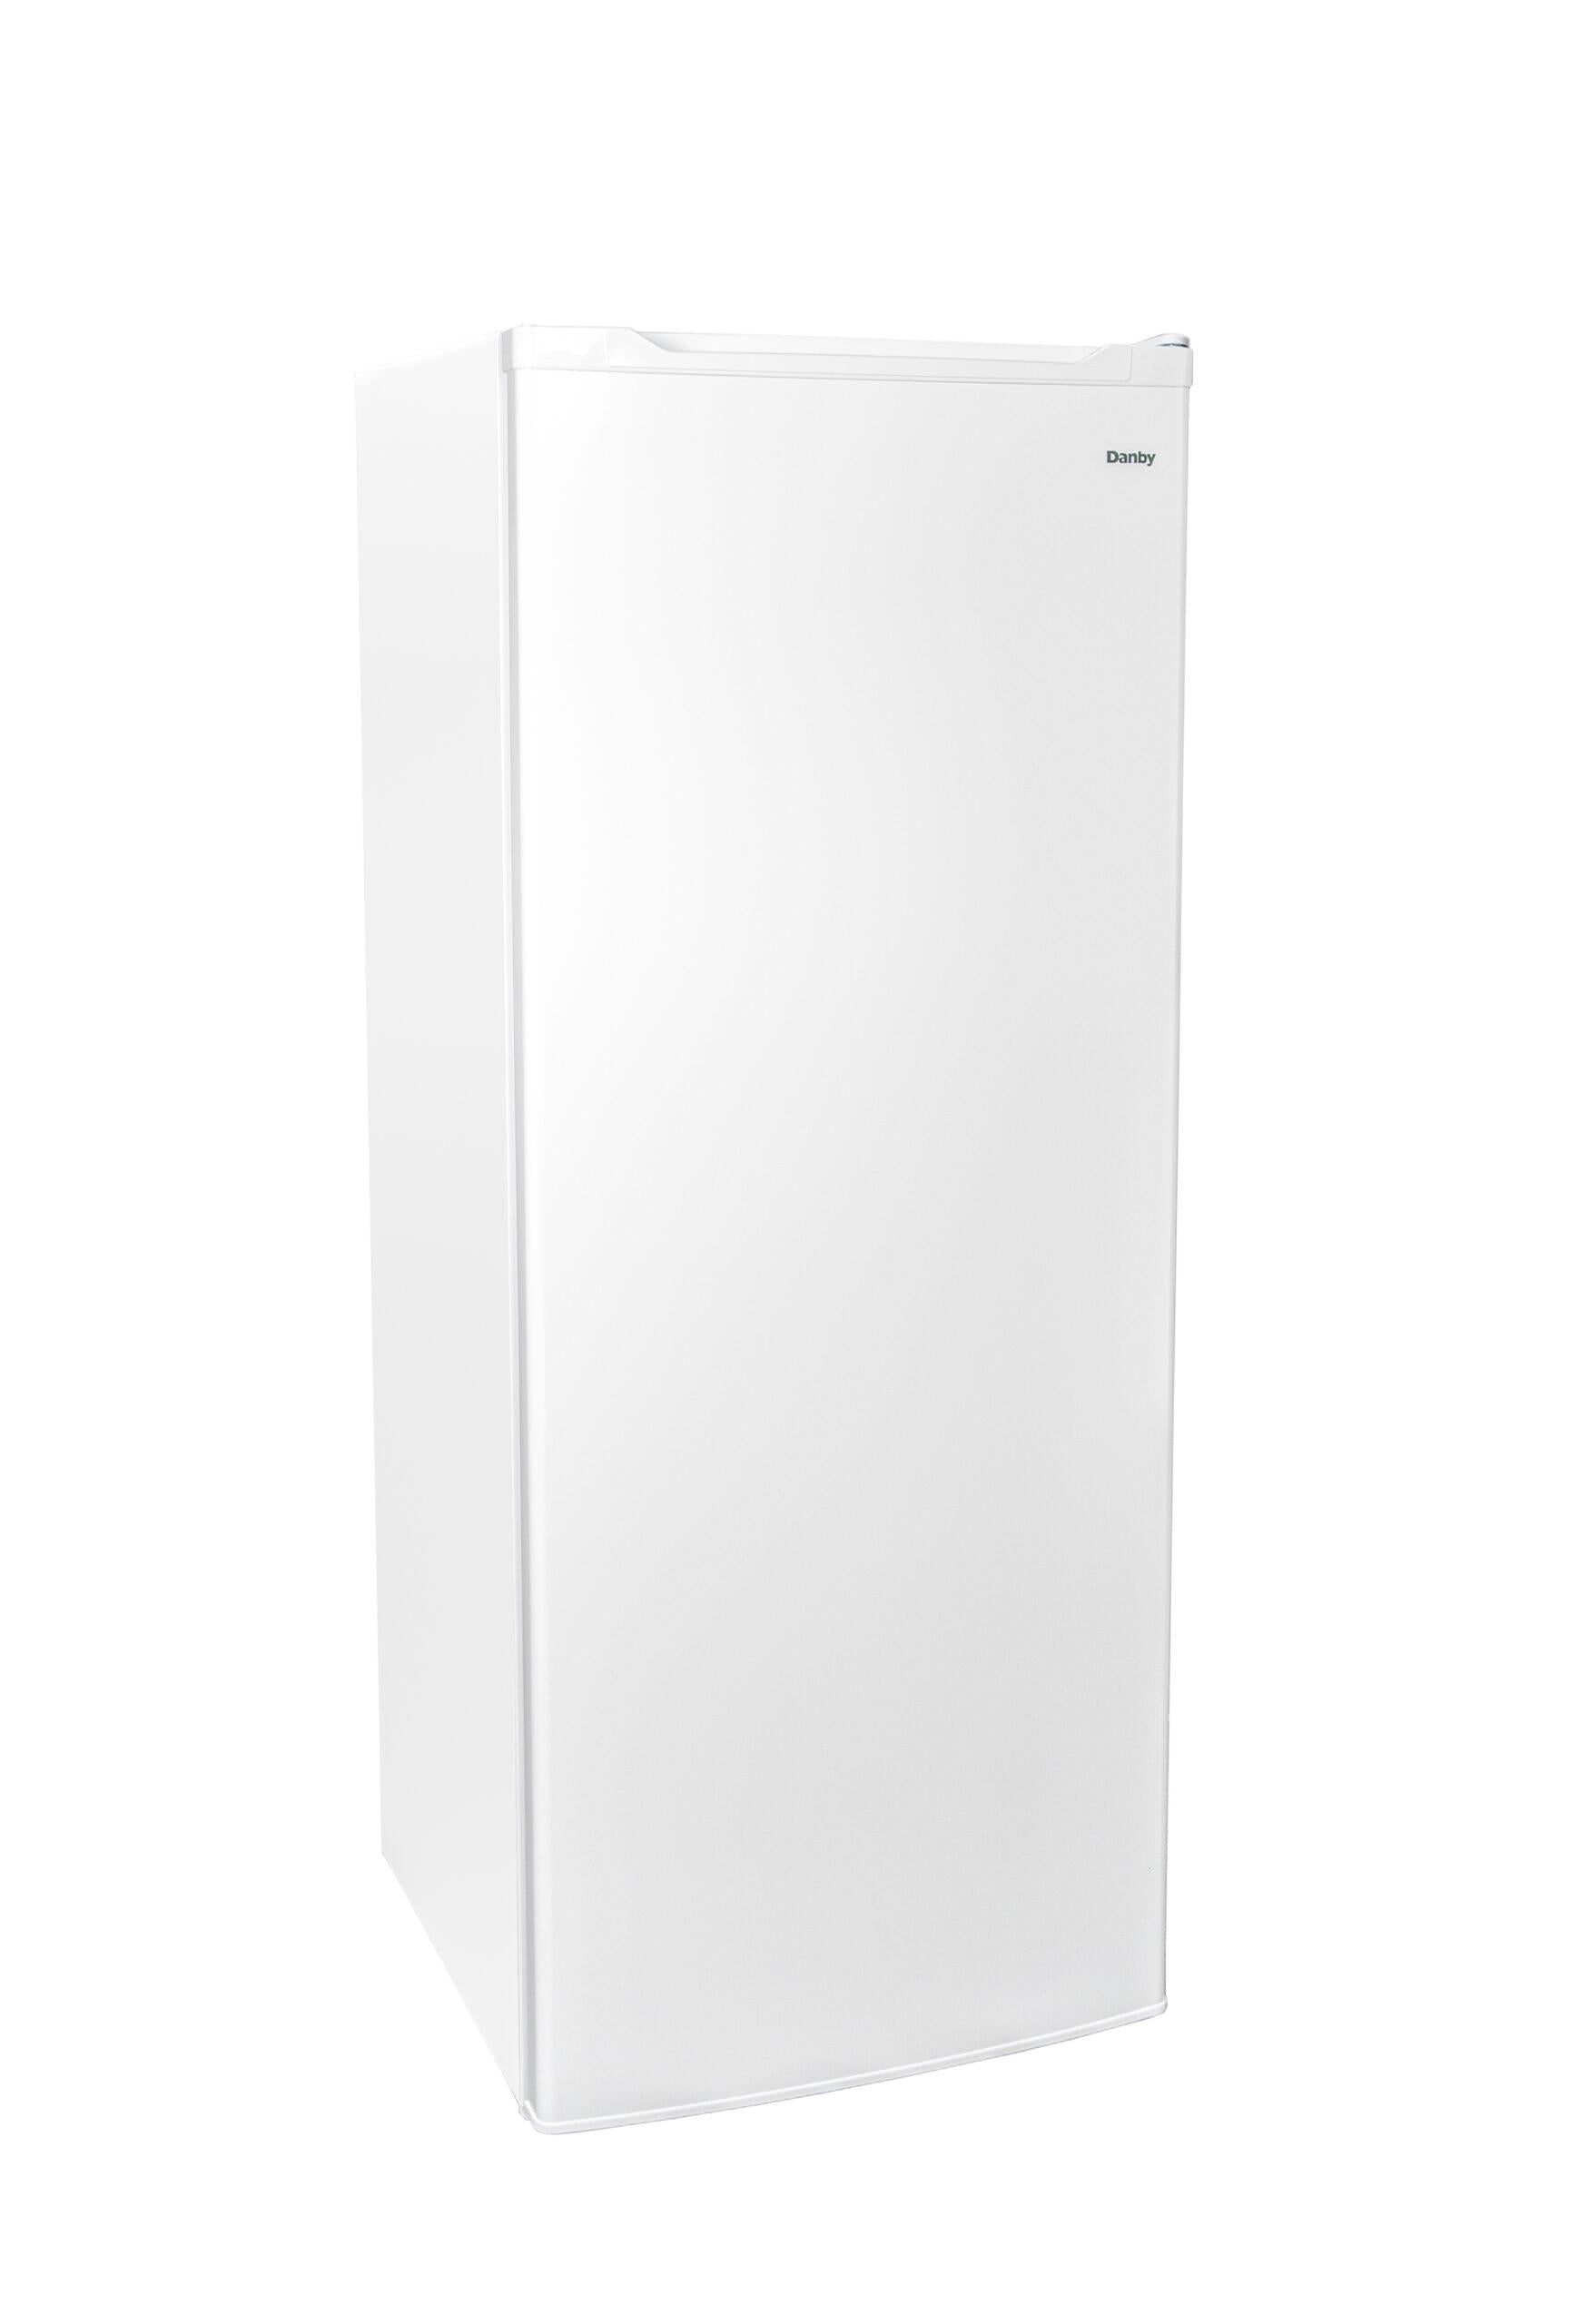 Danby 6.0 cu. ft. Upright Freezer in White